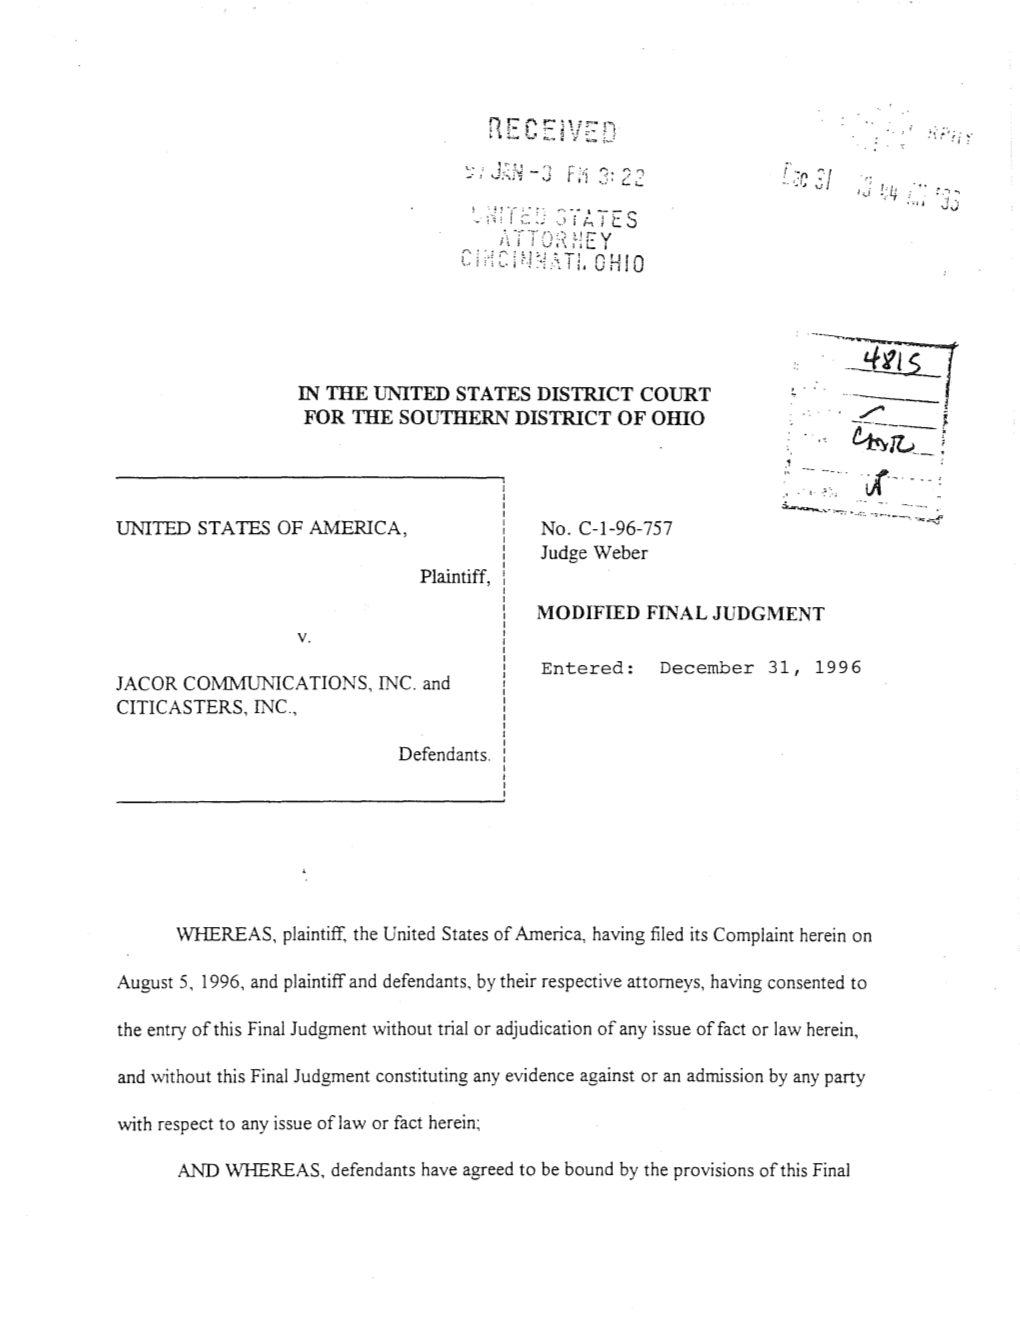 Modified Final Judgment: U.S. V. Jacor Communications, Inc. And